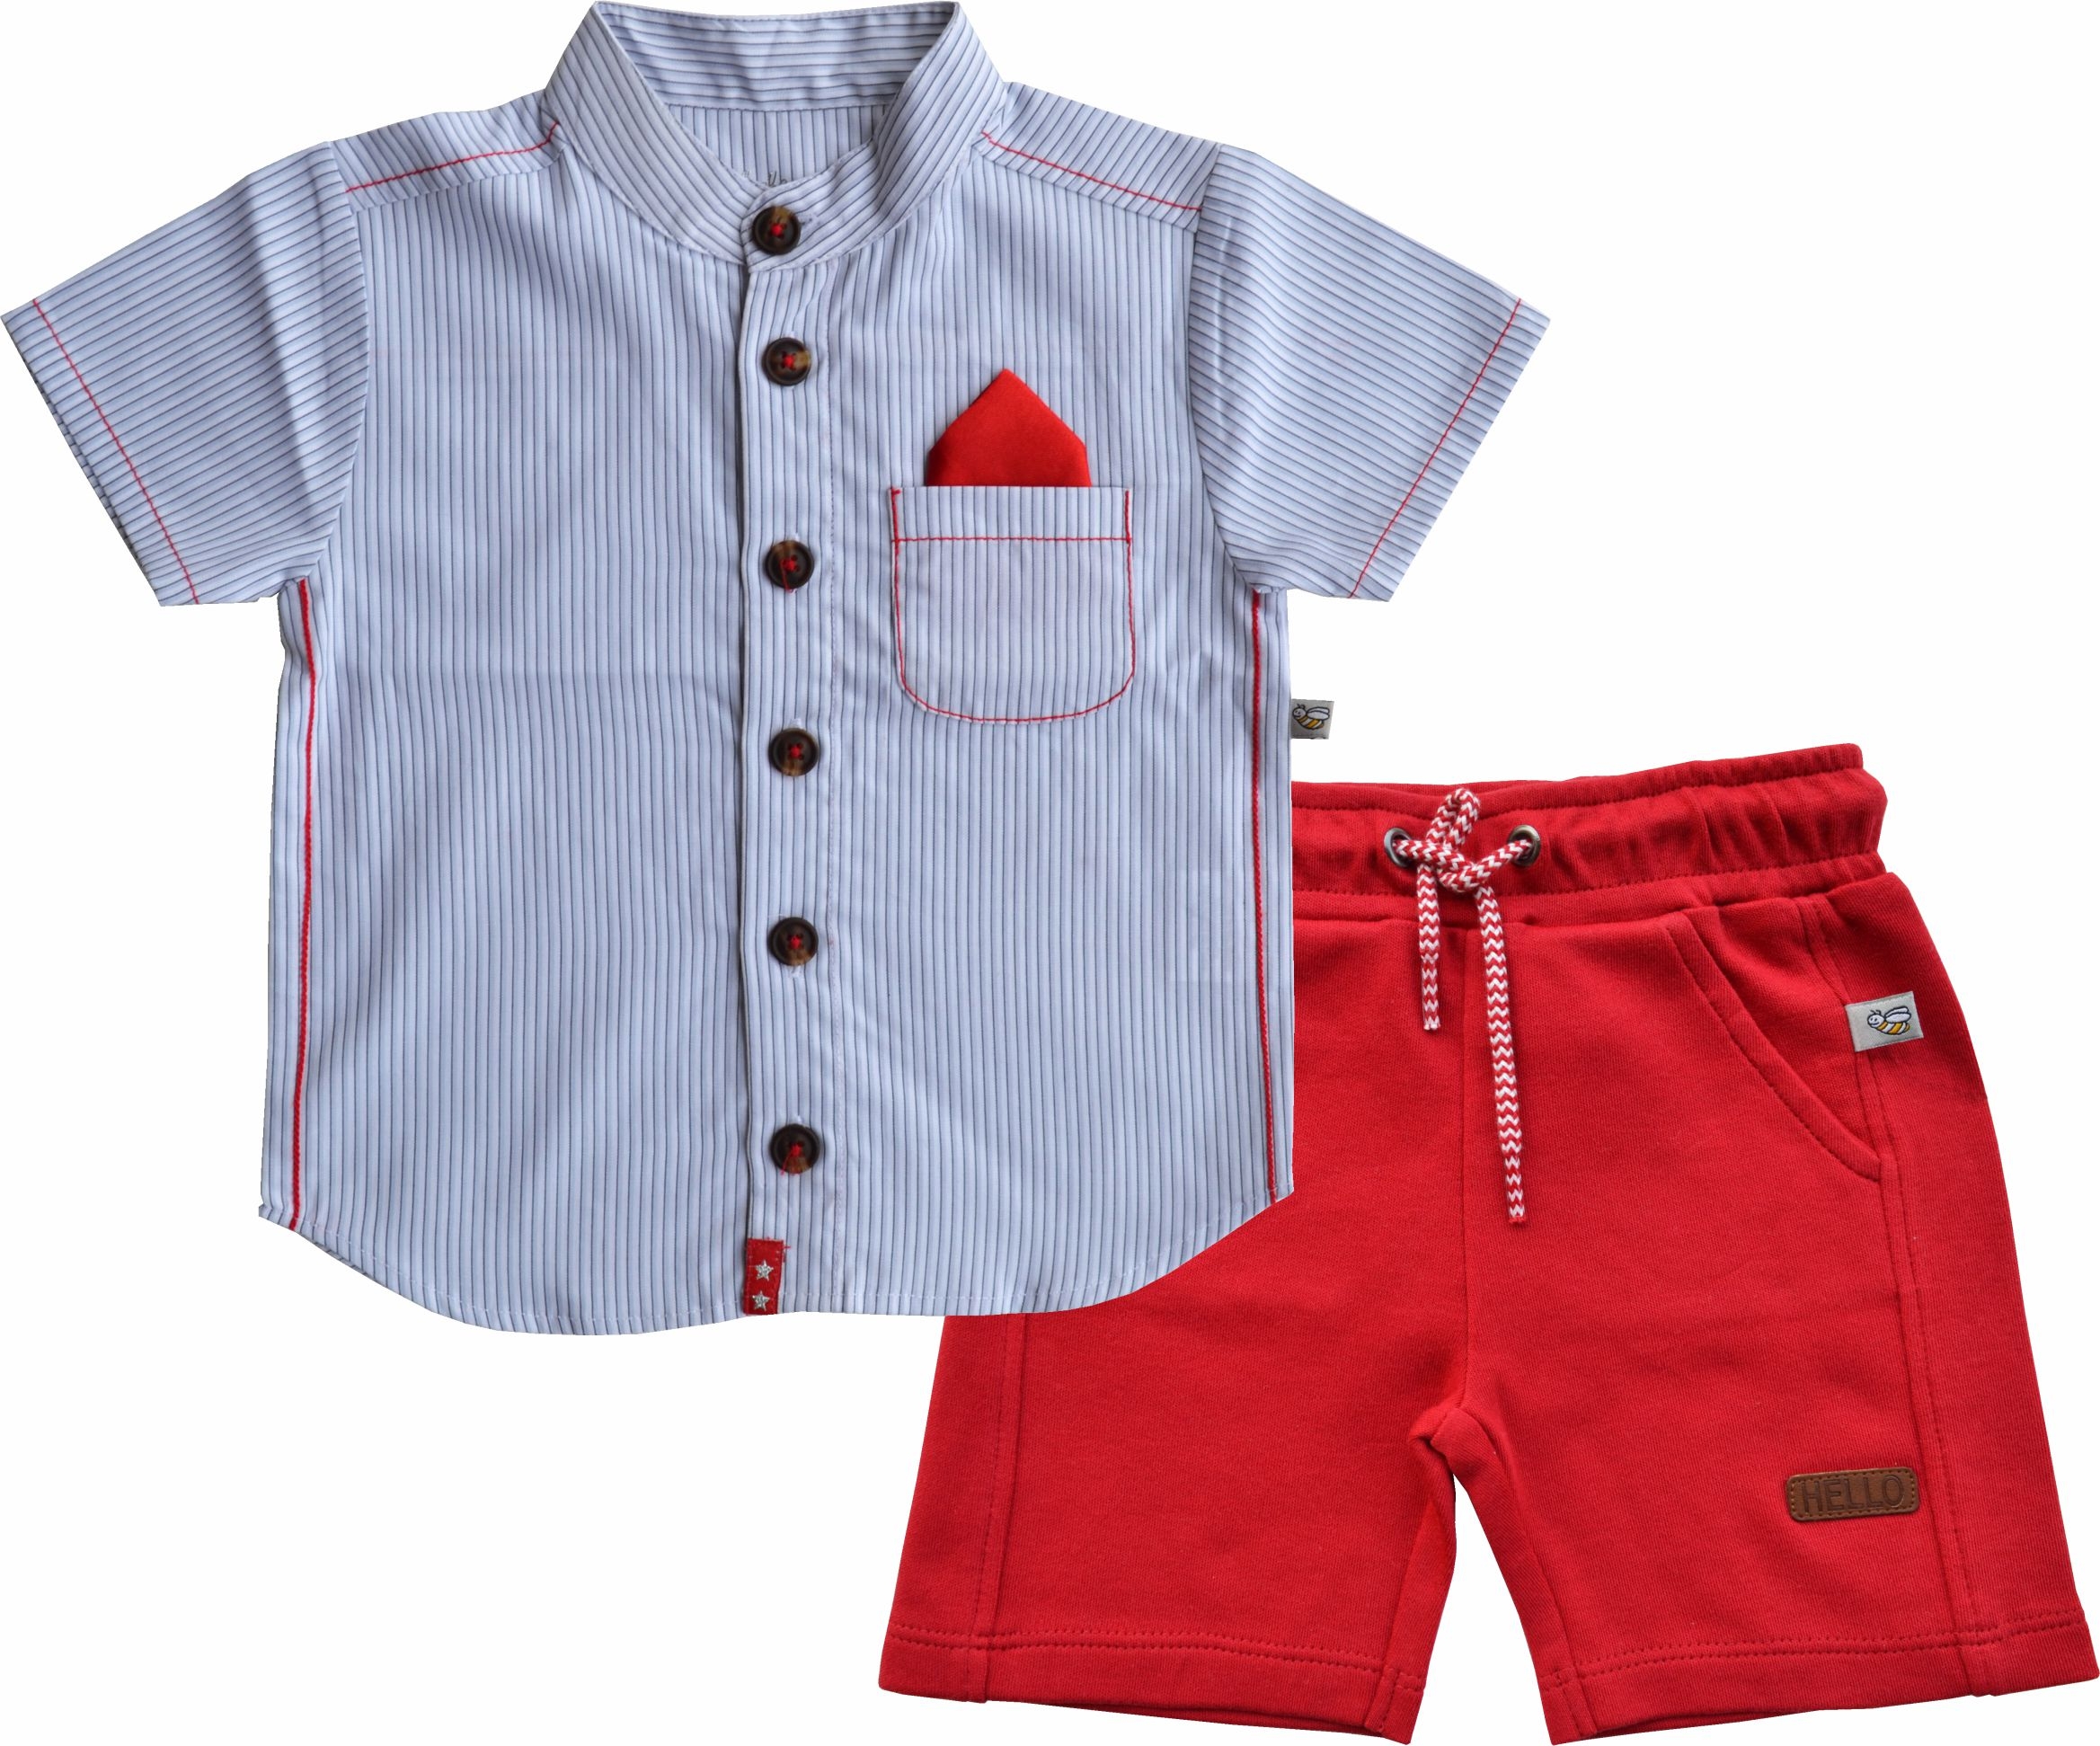 White Stripe Short Sleeve Kurta Shirt+Red Shorts Set (100% Cotton)